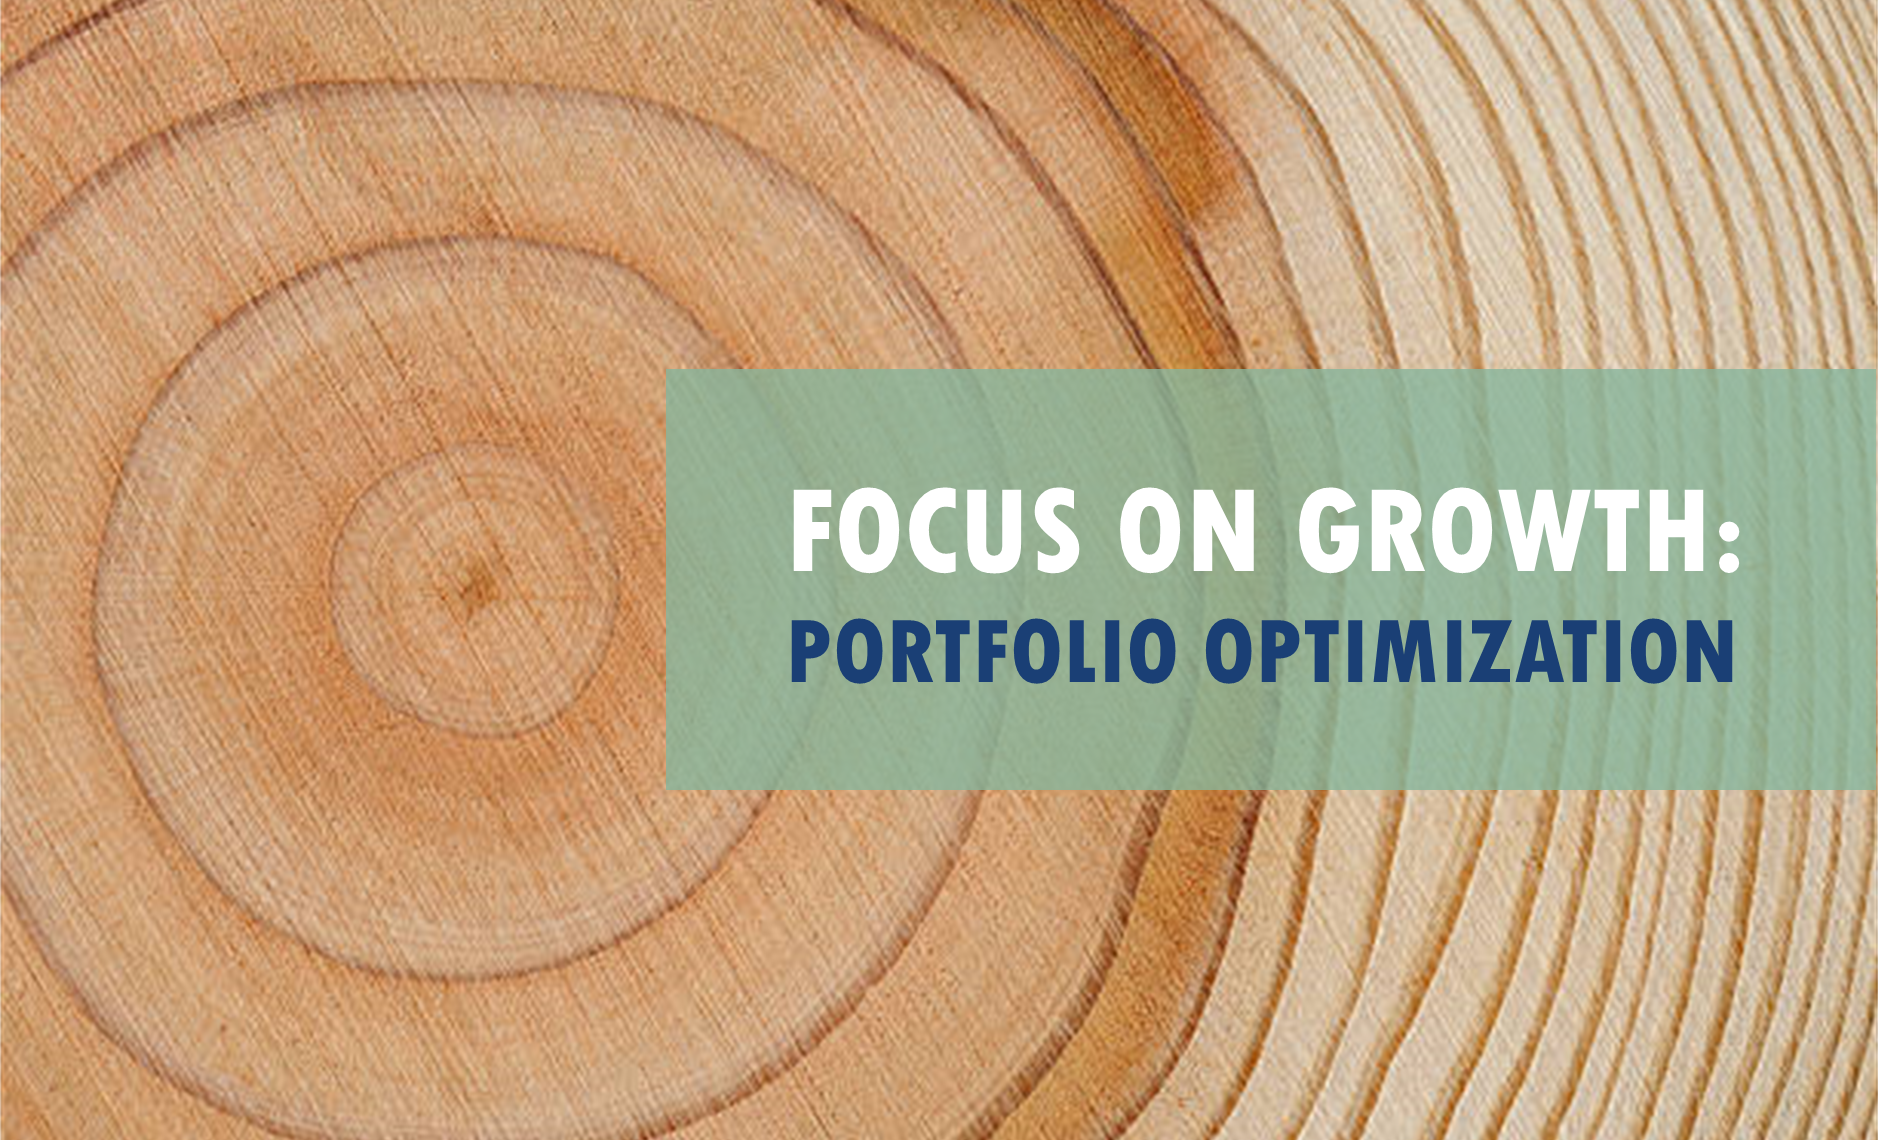 Focus on growth portfolio optimization